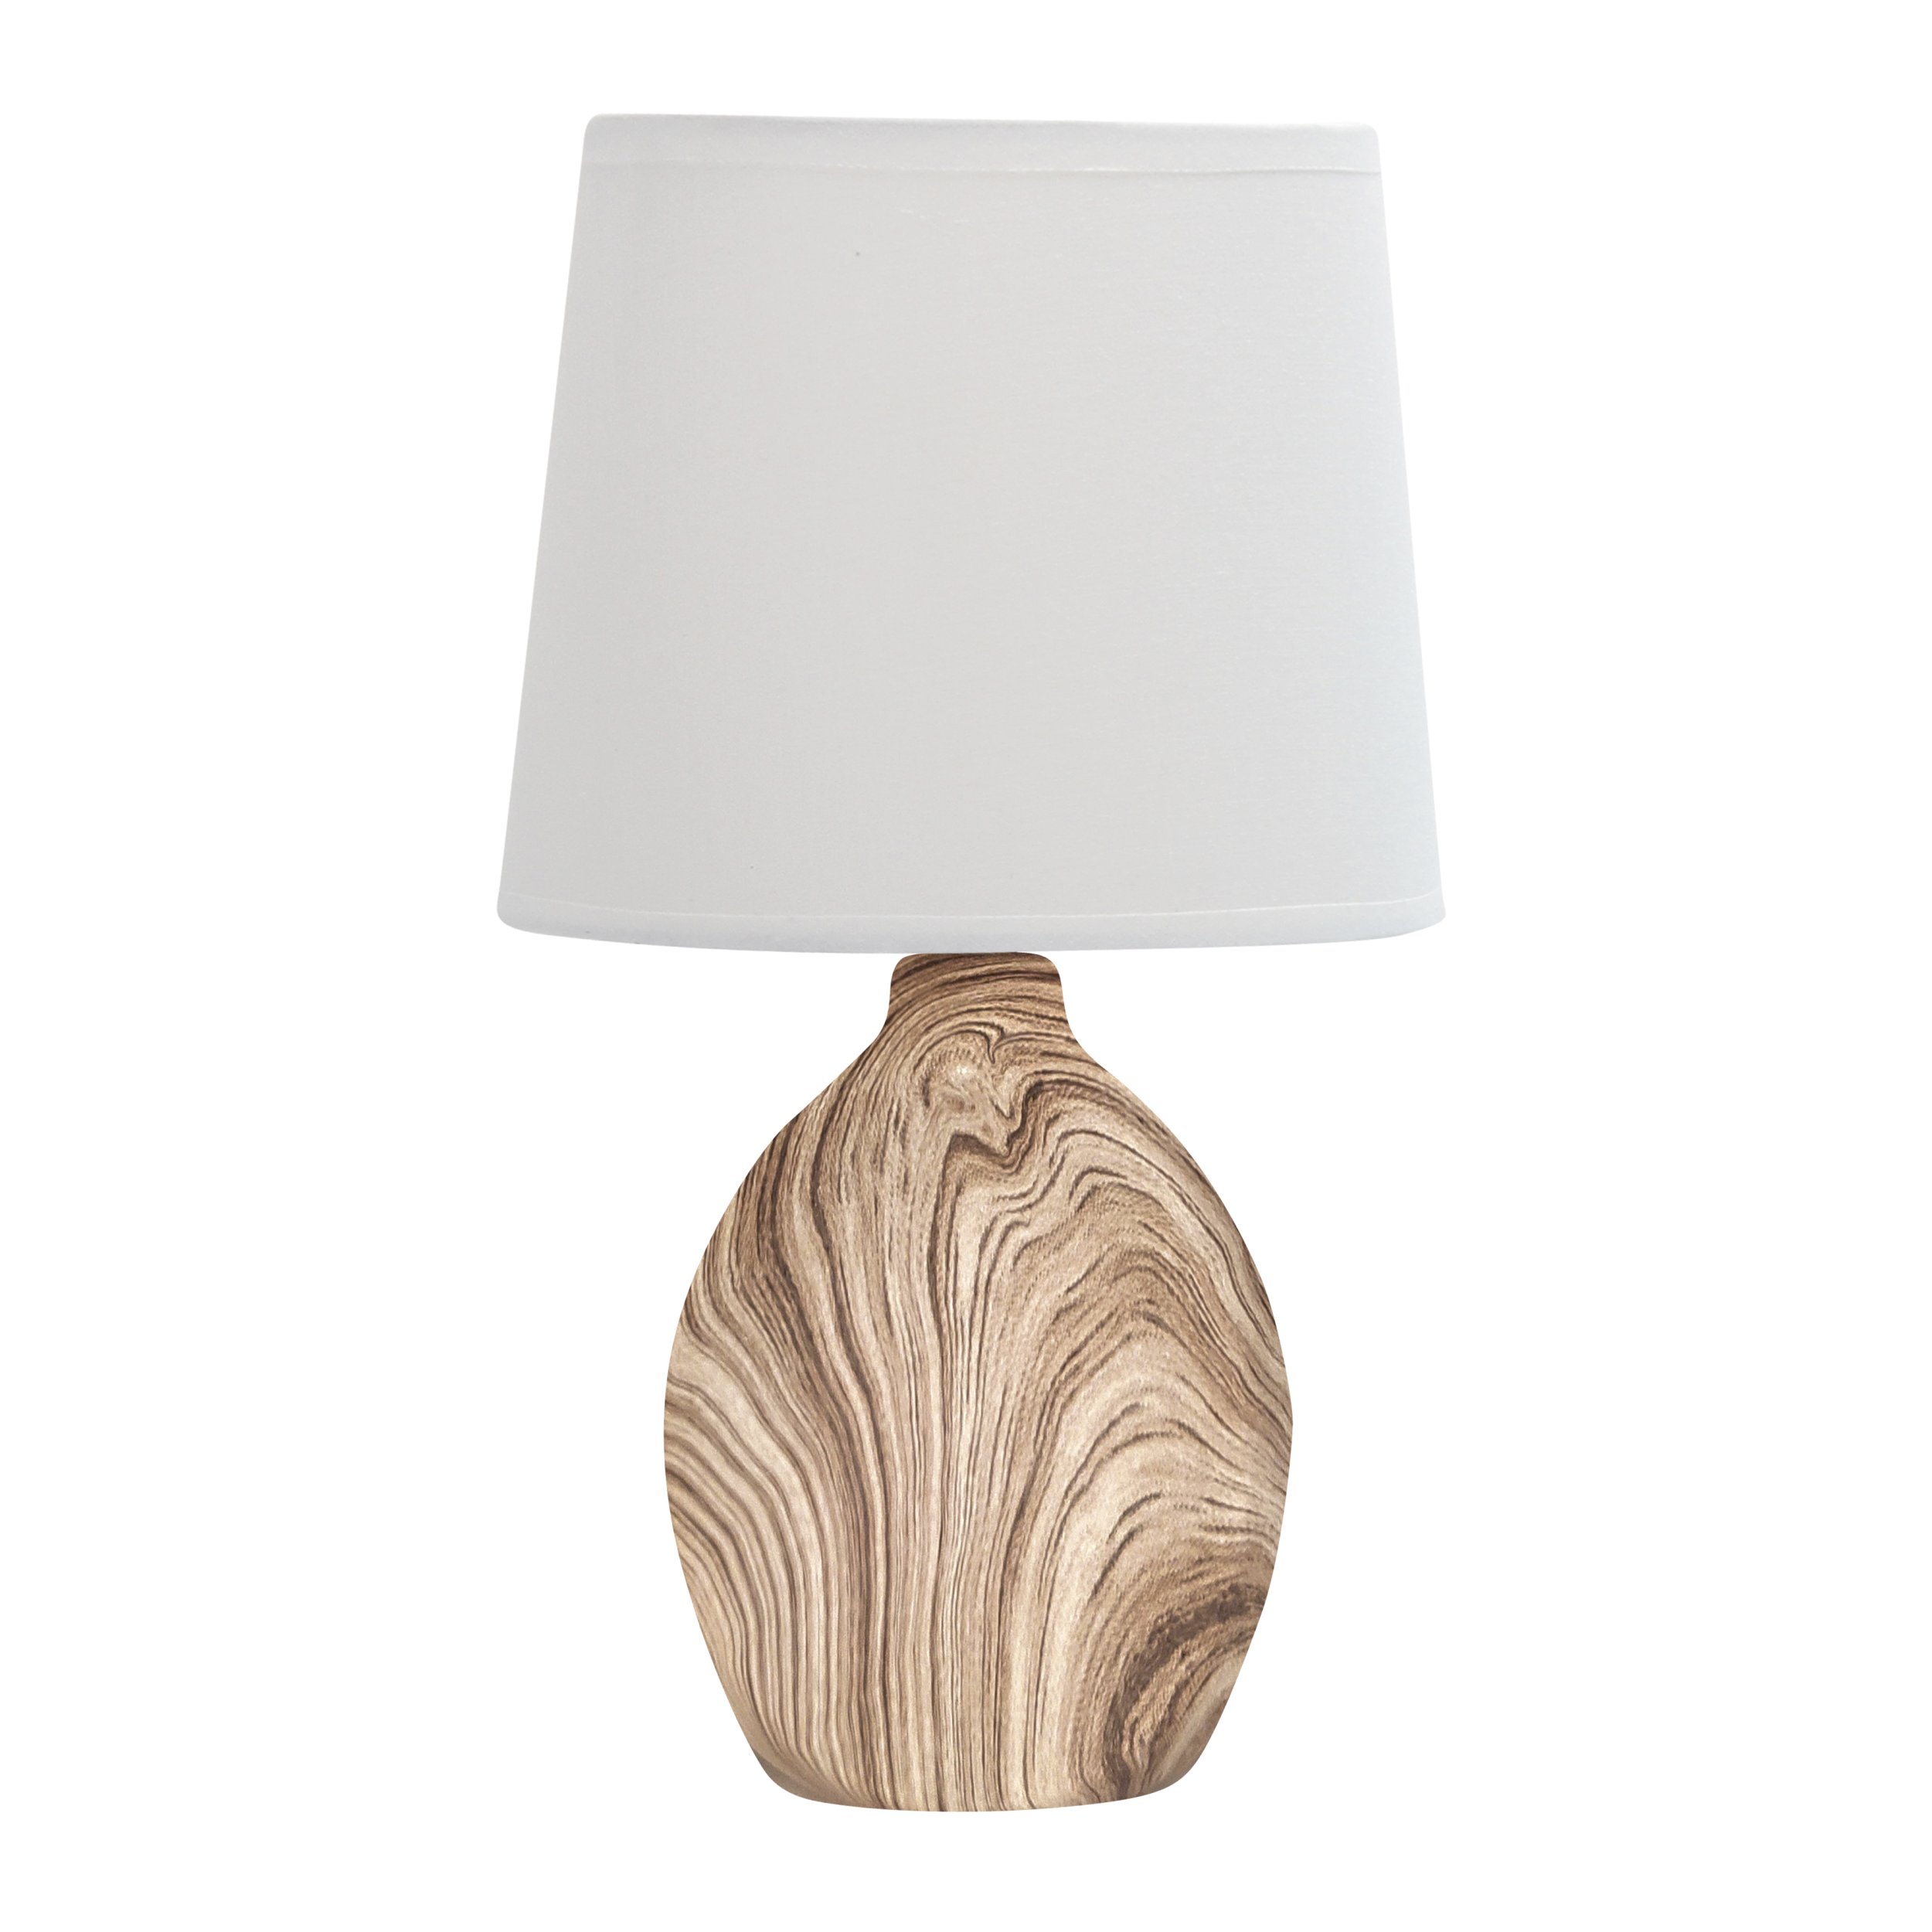 Декоративная настольная лампа Rivoli CHIMERA 7072-503, цвет белый 7072-503 Б0057275 - фото 1